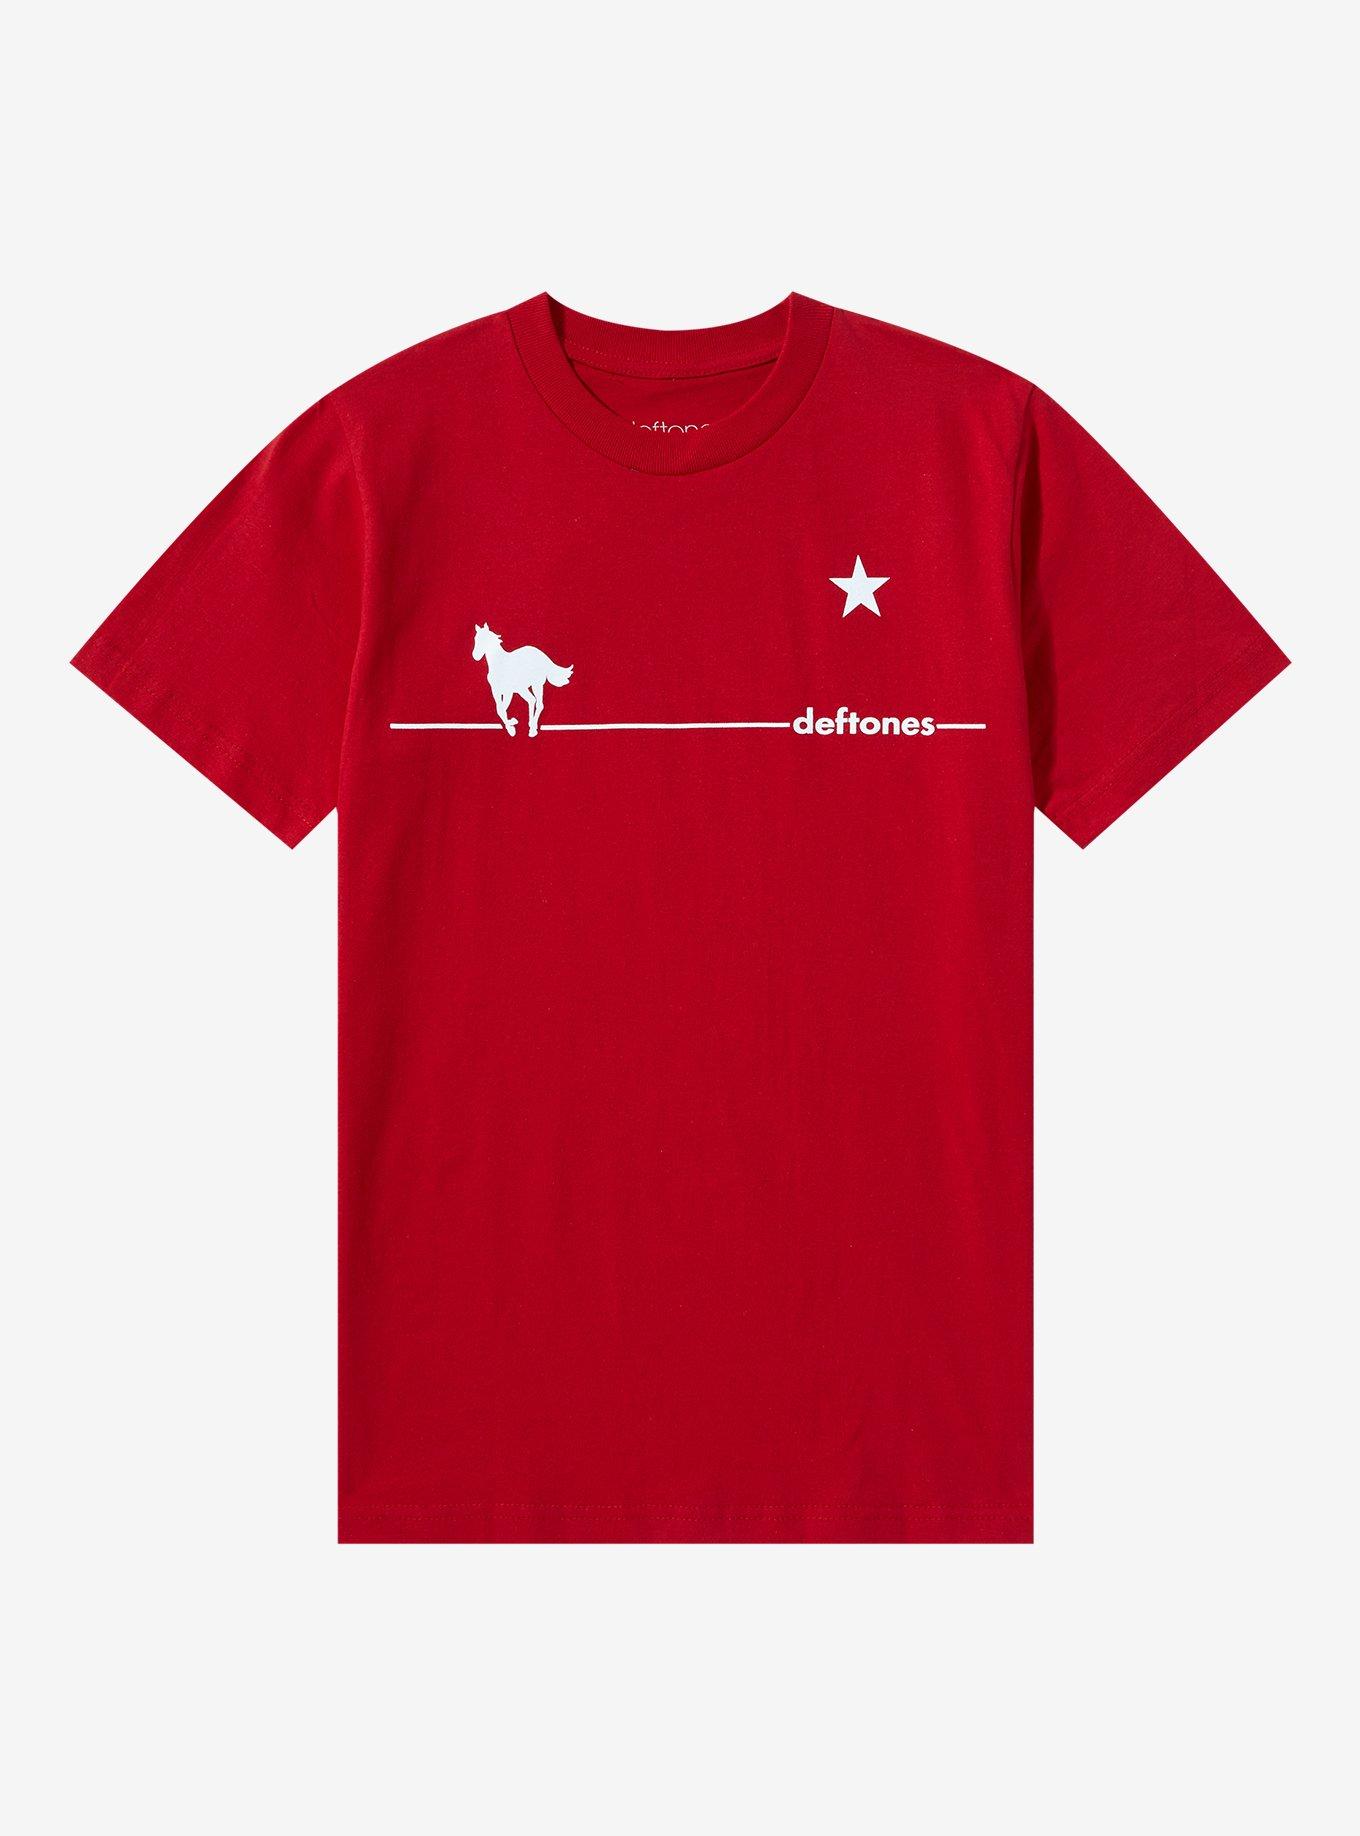 Deftones White Pony Boyfriend Fit Girls T-Shirt, RED, hi-res